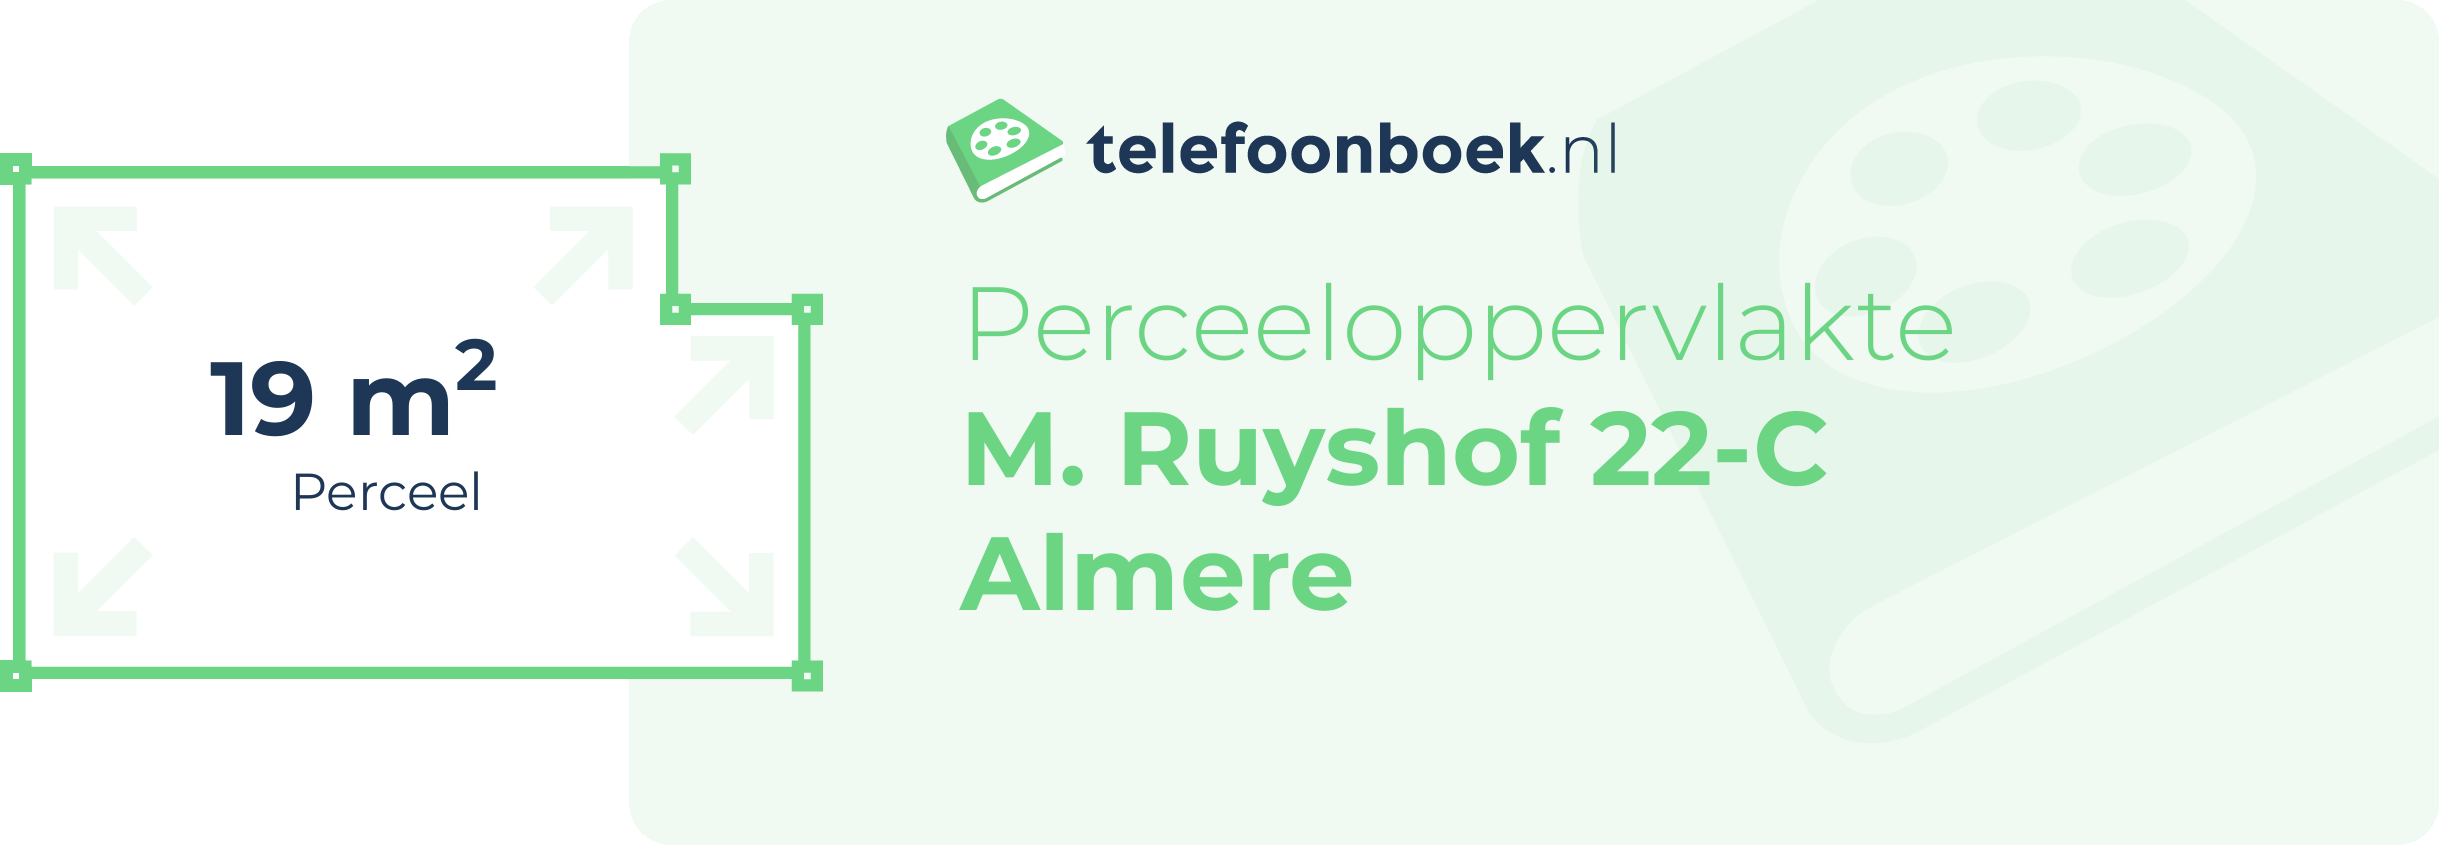 Perceeloppervlakte M. Ruyshof 22-C Almere